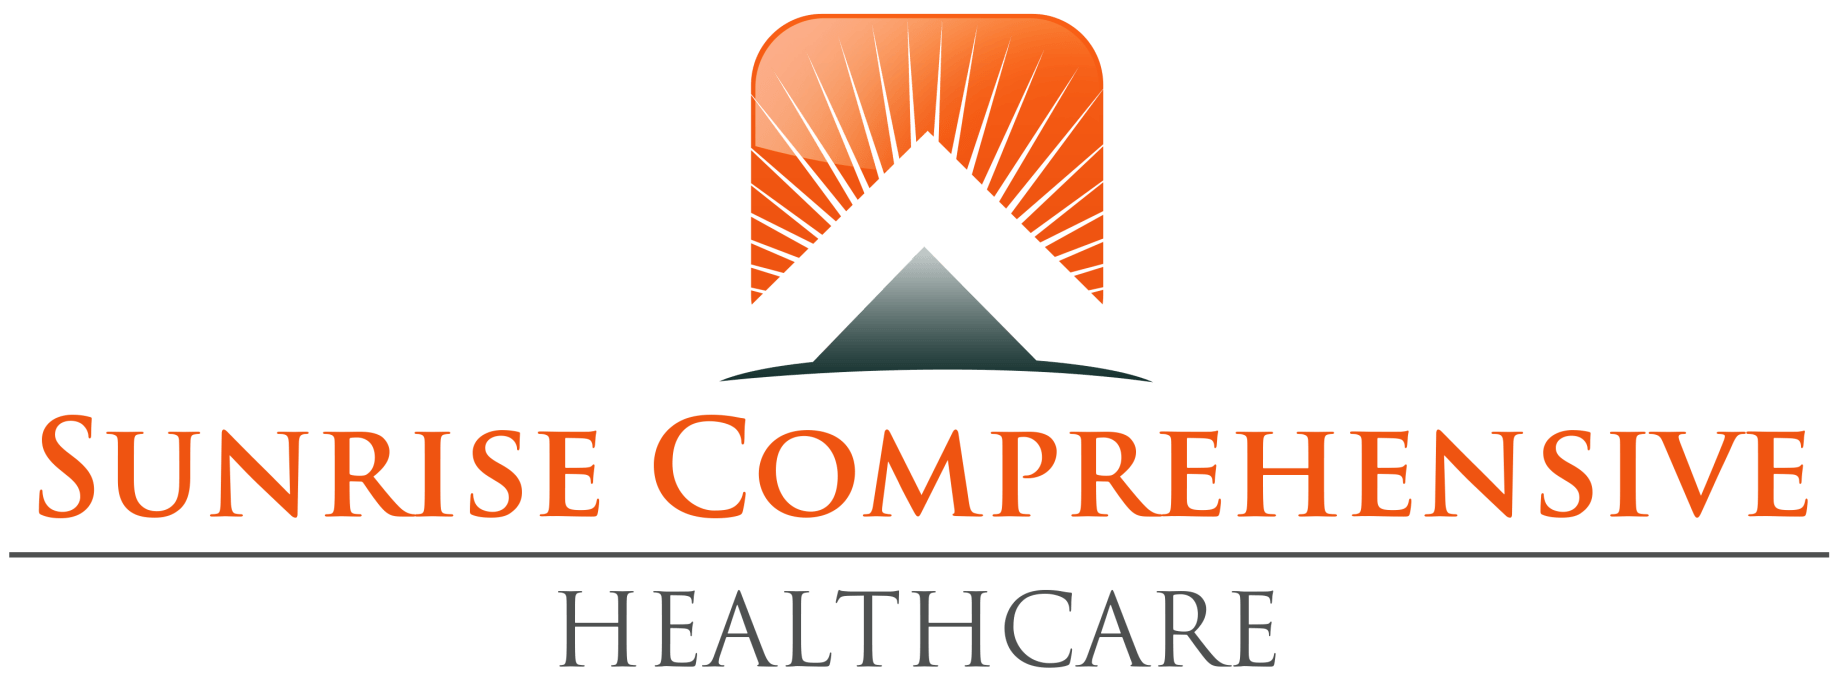 Sunrise Comprehensive Healthcare logo